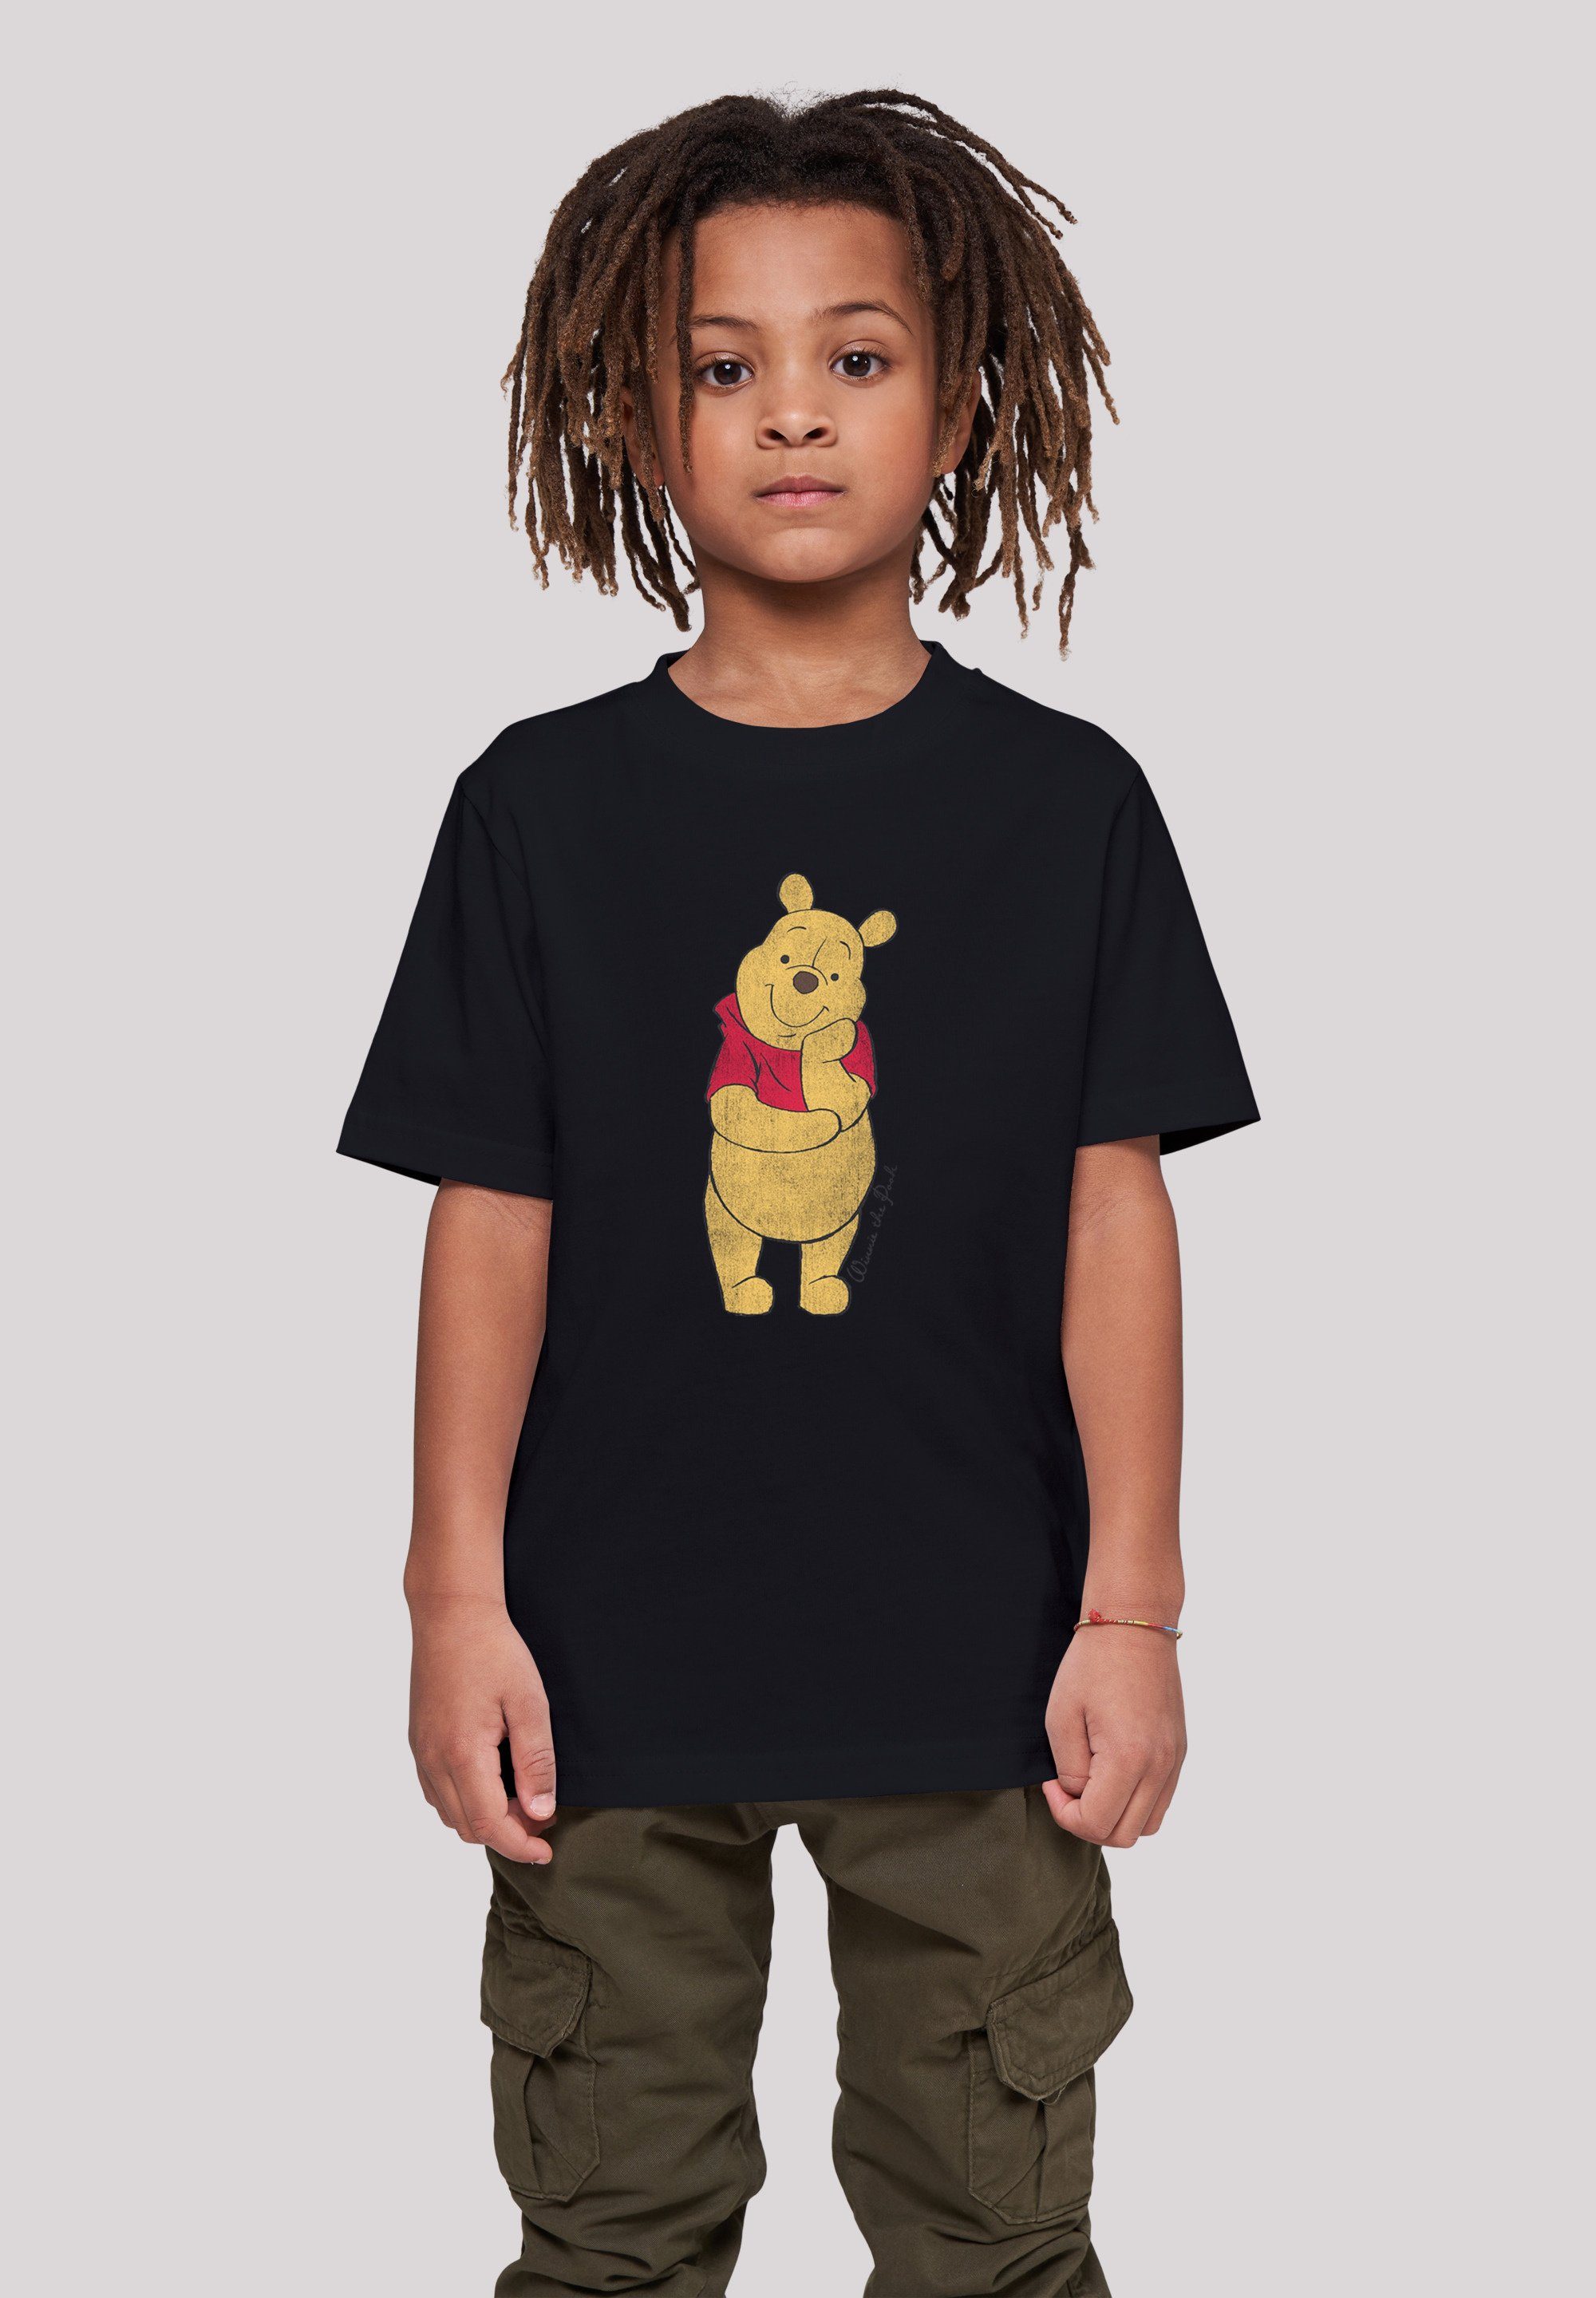 F4NT4STIC Unisex Pooh T-Shirt Classic The Kinder,Premium Merch,Jungen,Mädchen,Bedruckt Winnie Disney